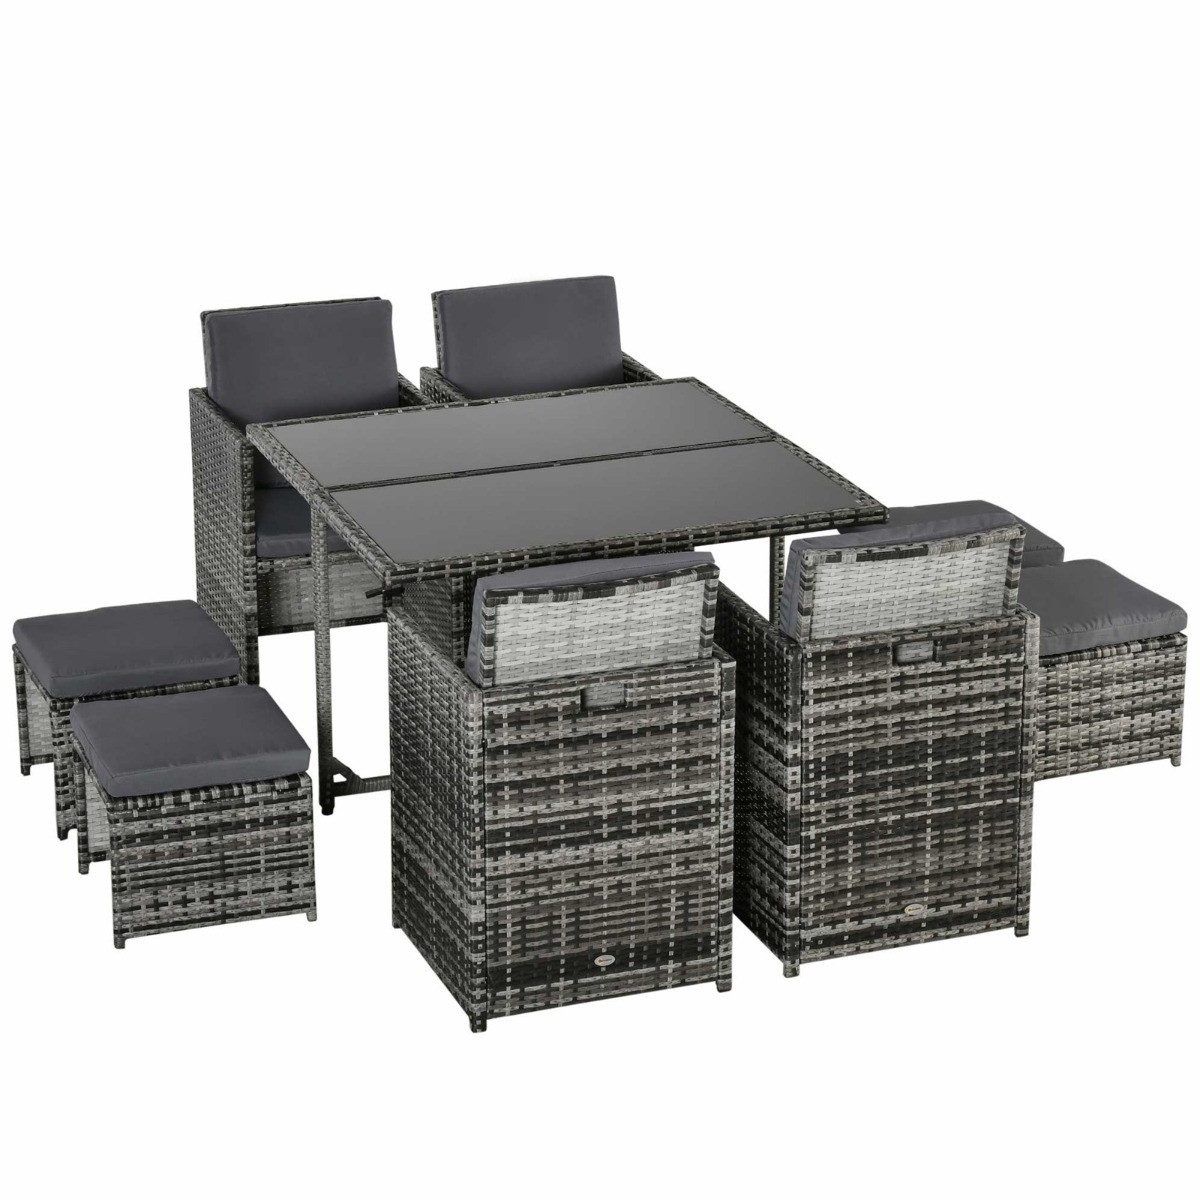 Outsunny Rattan Garden Furniture Cube Set, 8 Seater - Grey>